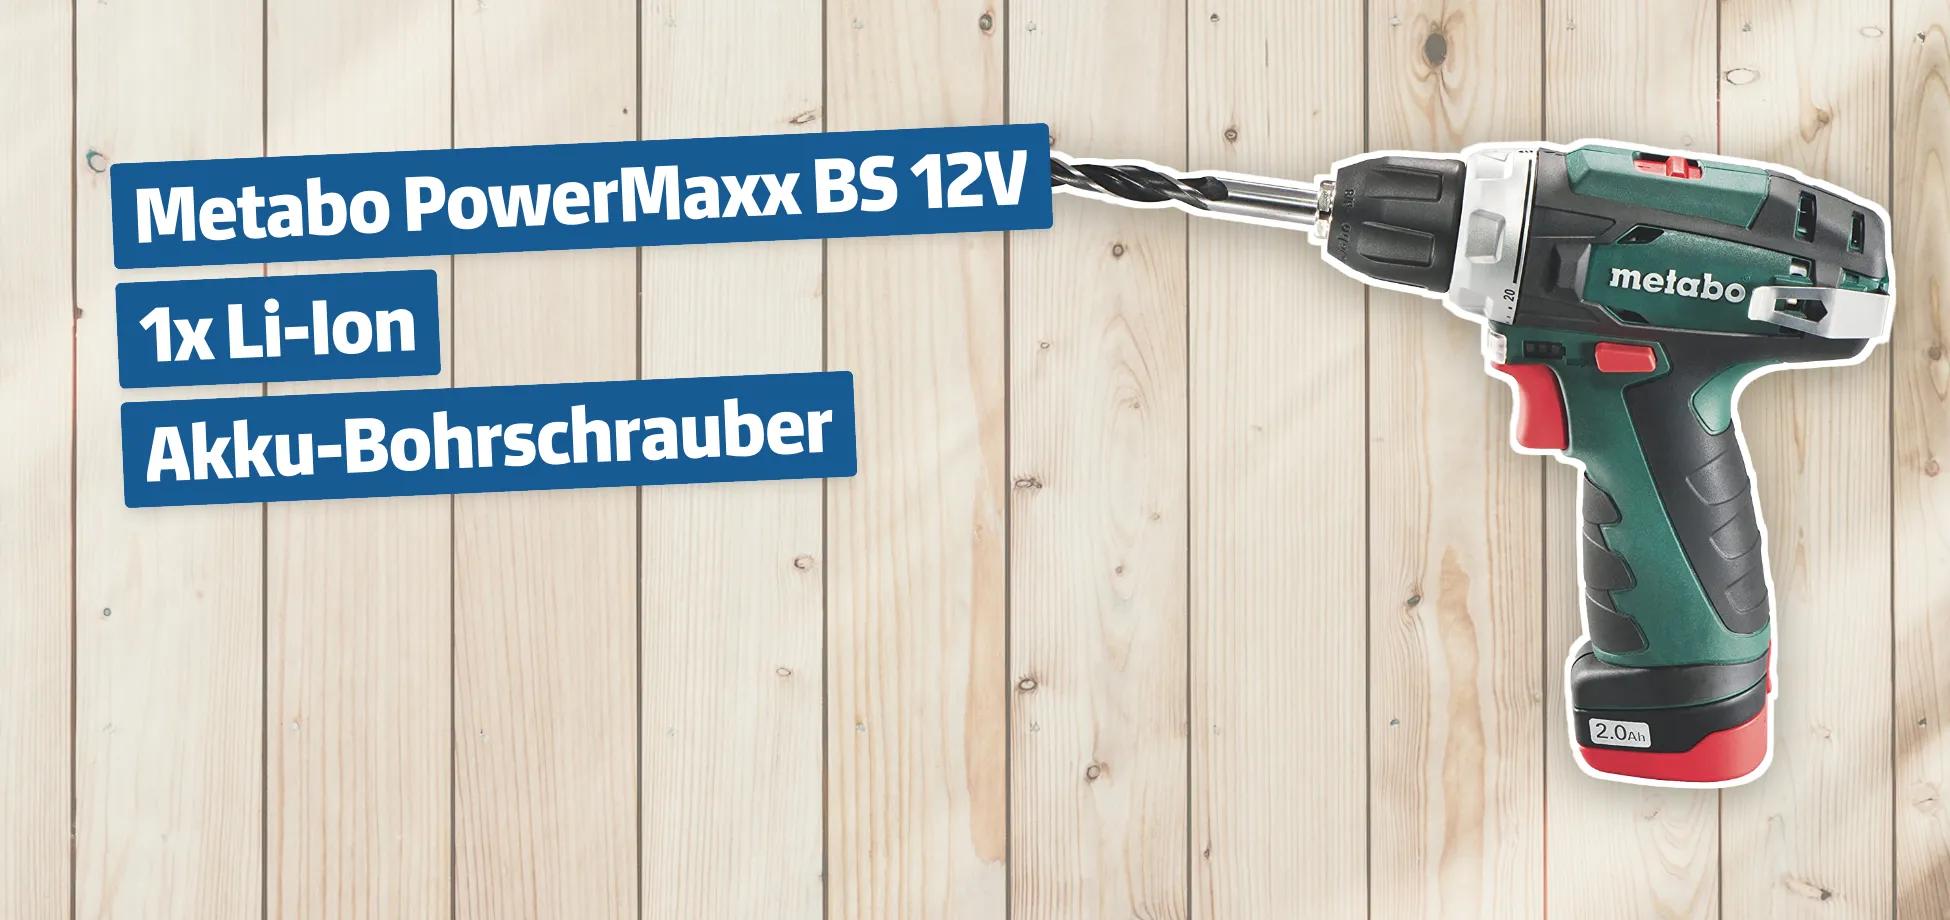 Metabo PowerMaxx BS 12V 1x Li-Ion Akku-Bohrschrauber